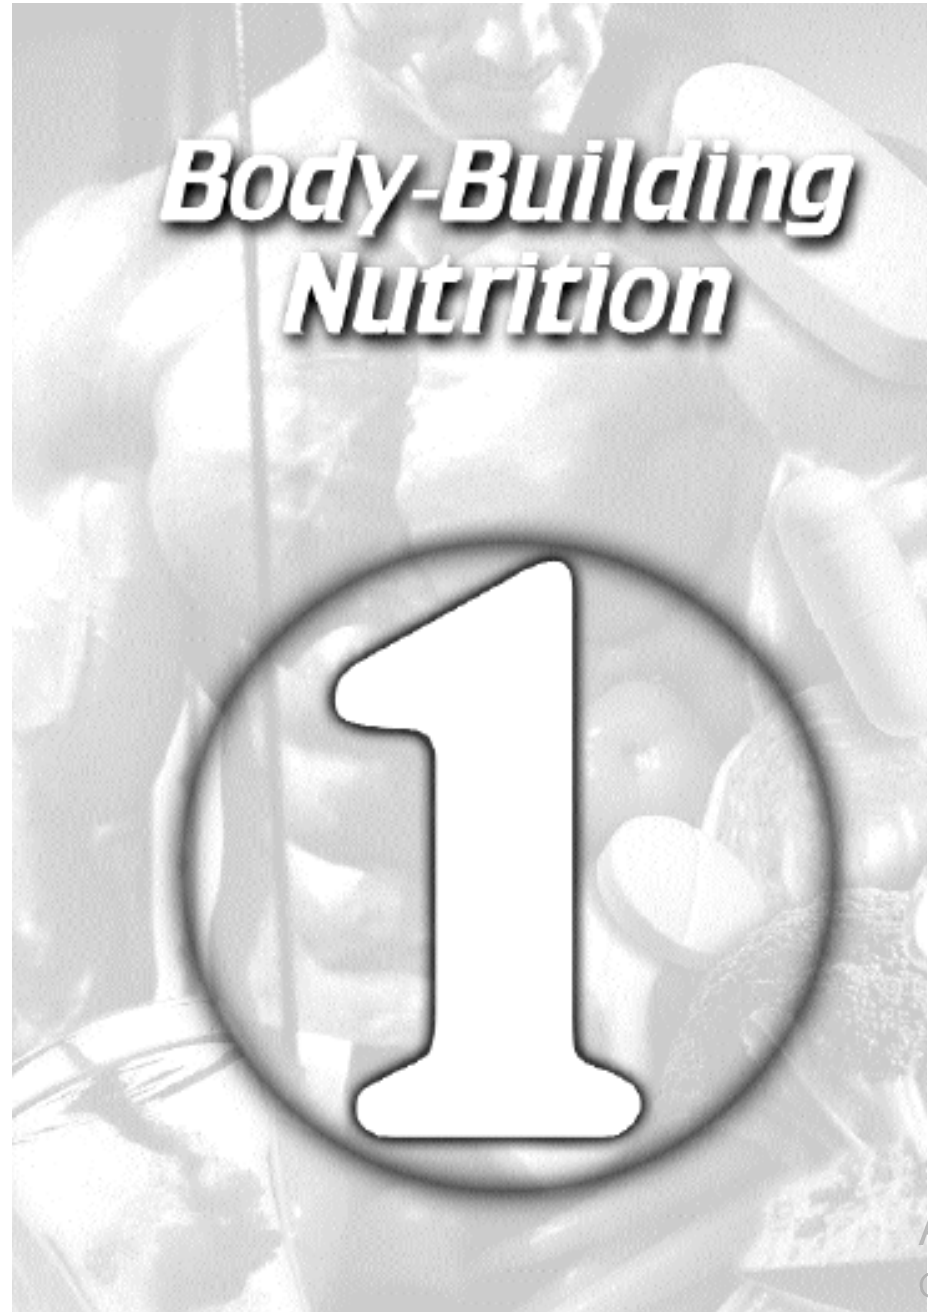 Body-Building Nutrition